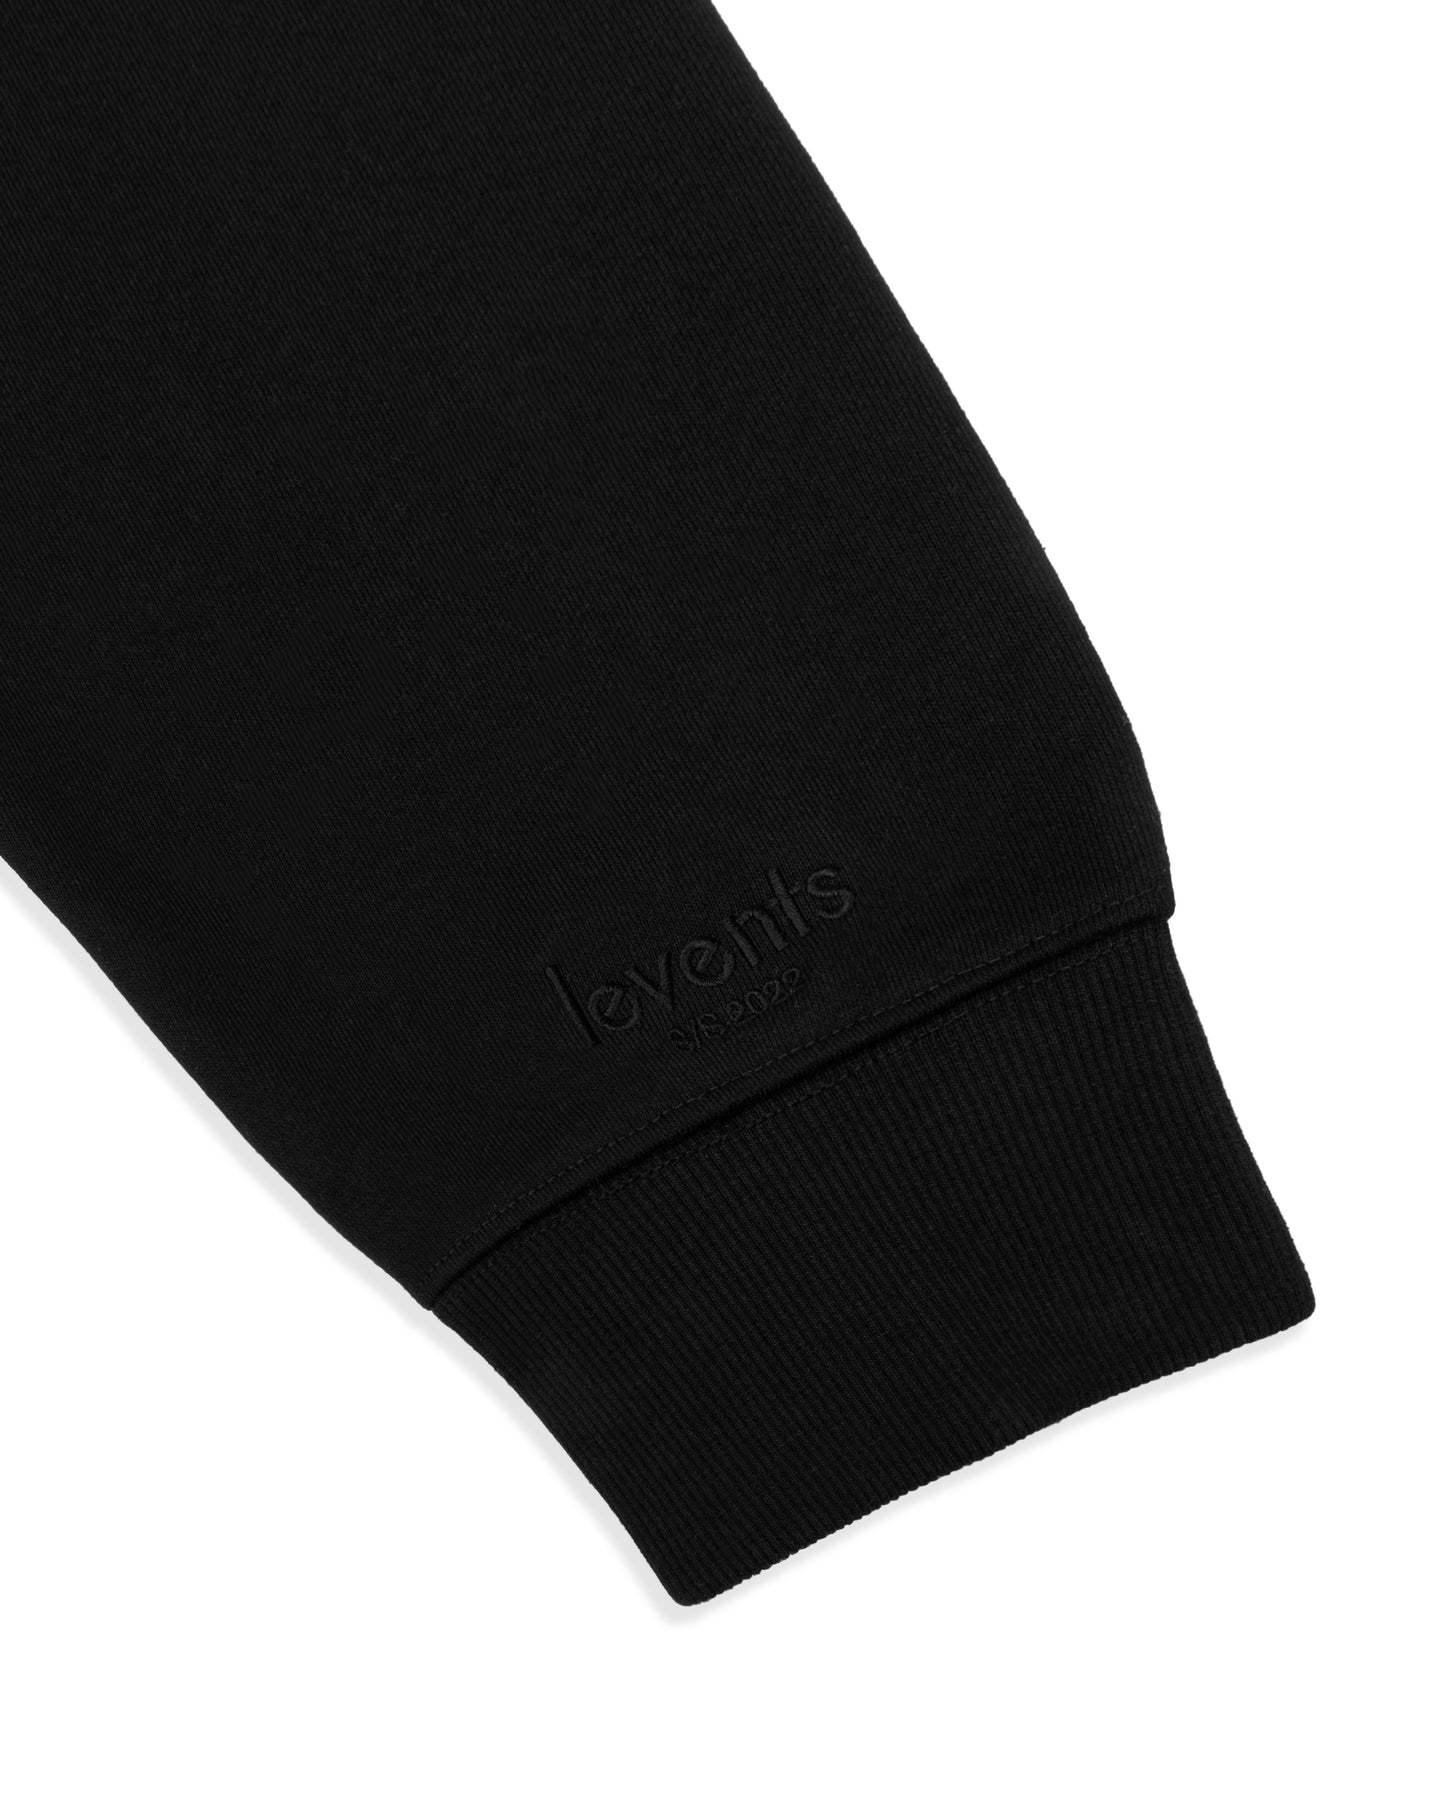 Levents® Mini Logo Hoodie/ Black